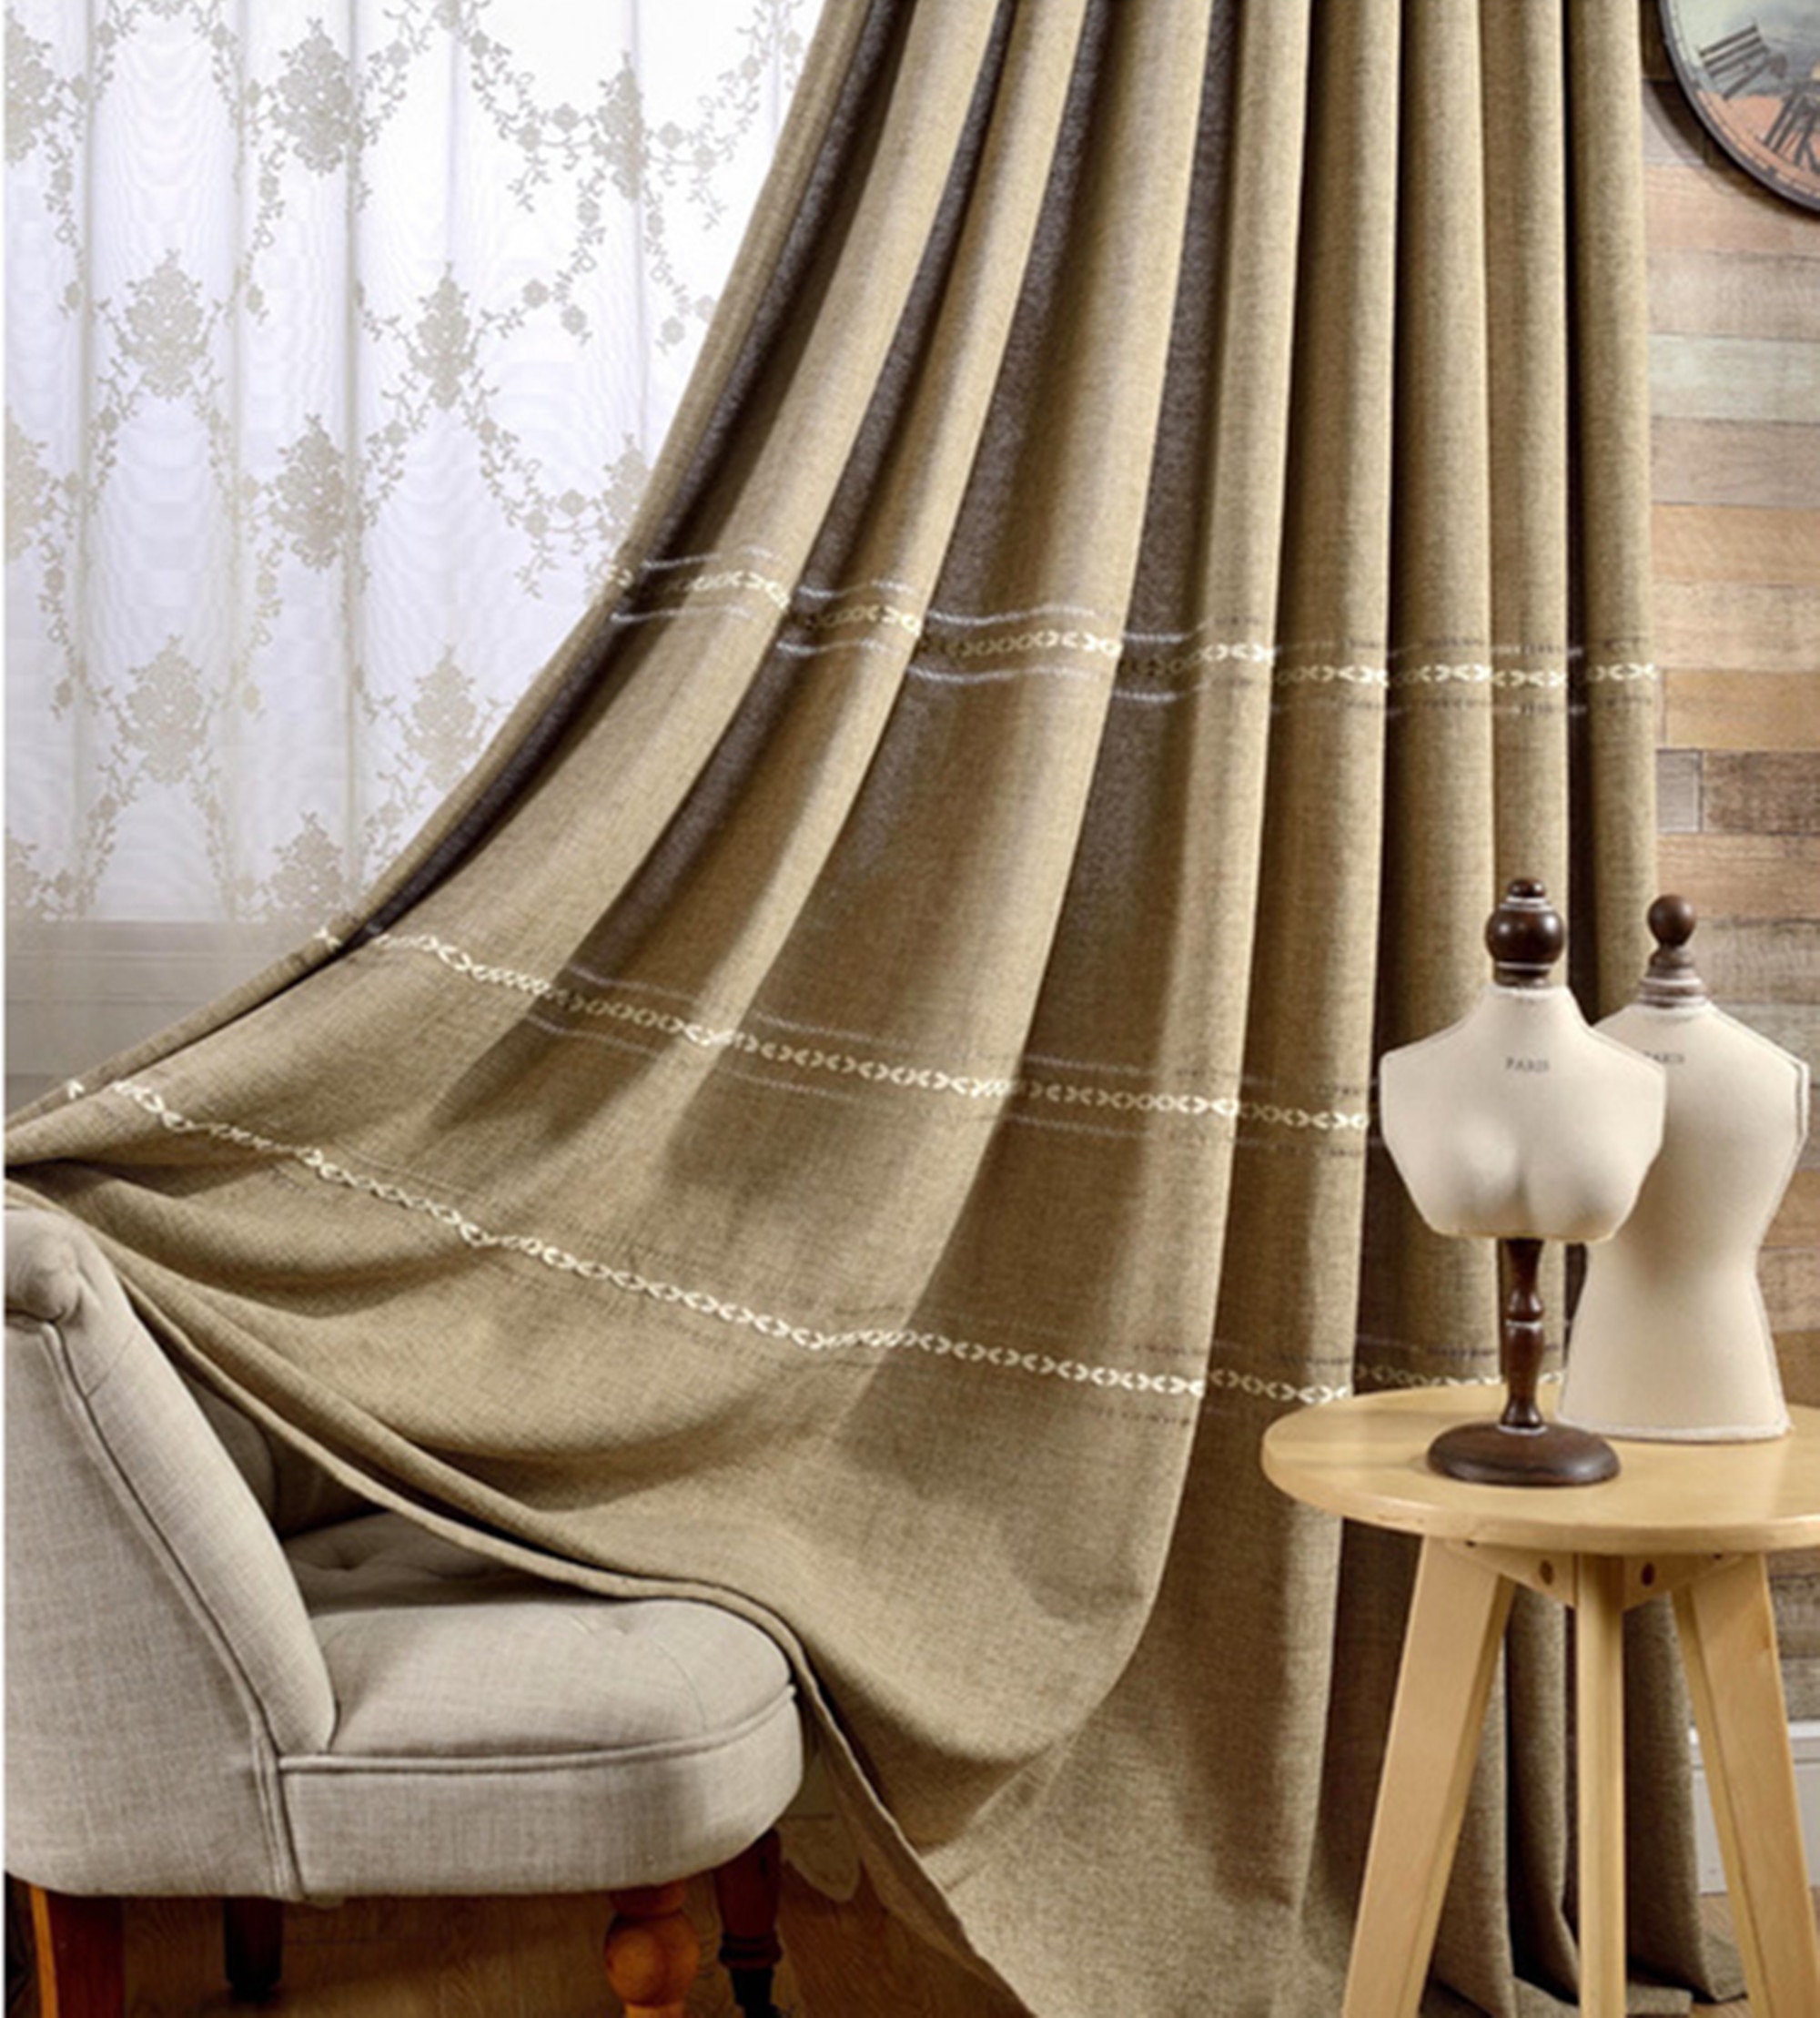 Persiana enrollable de arpillera clásica personalizada con cuerdas,  cortinas campestres hechas a mano, tonos rústicos para decoración del hogar  -  España